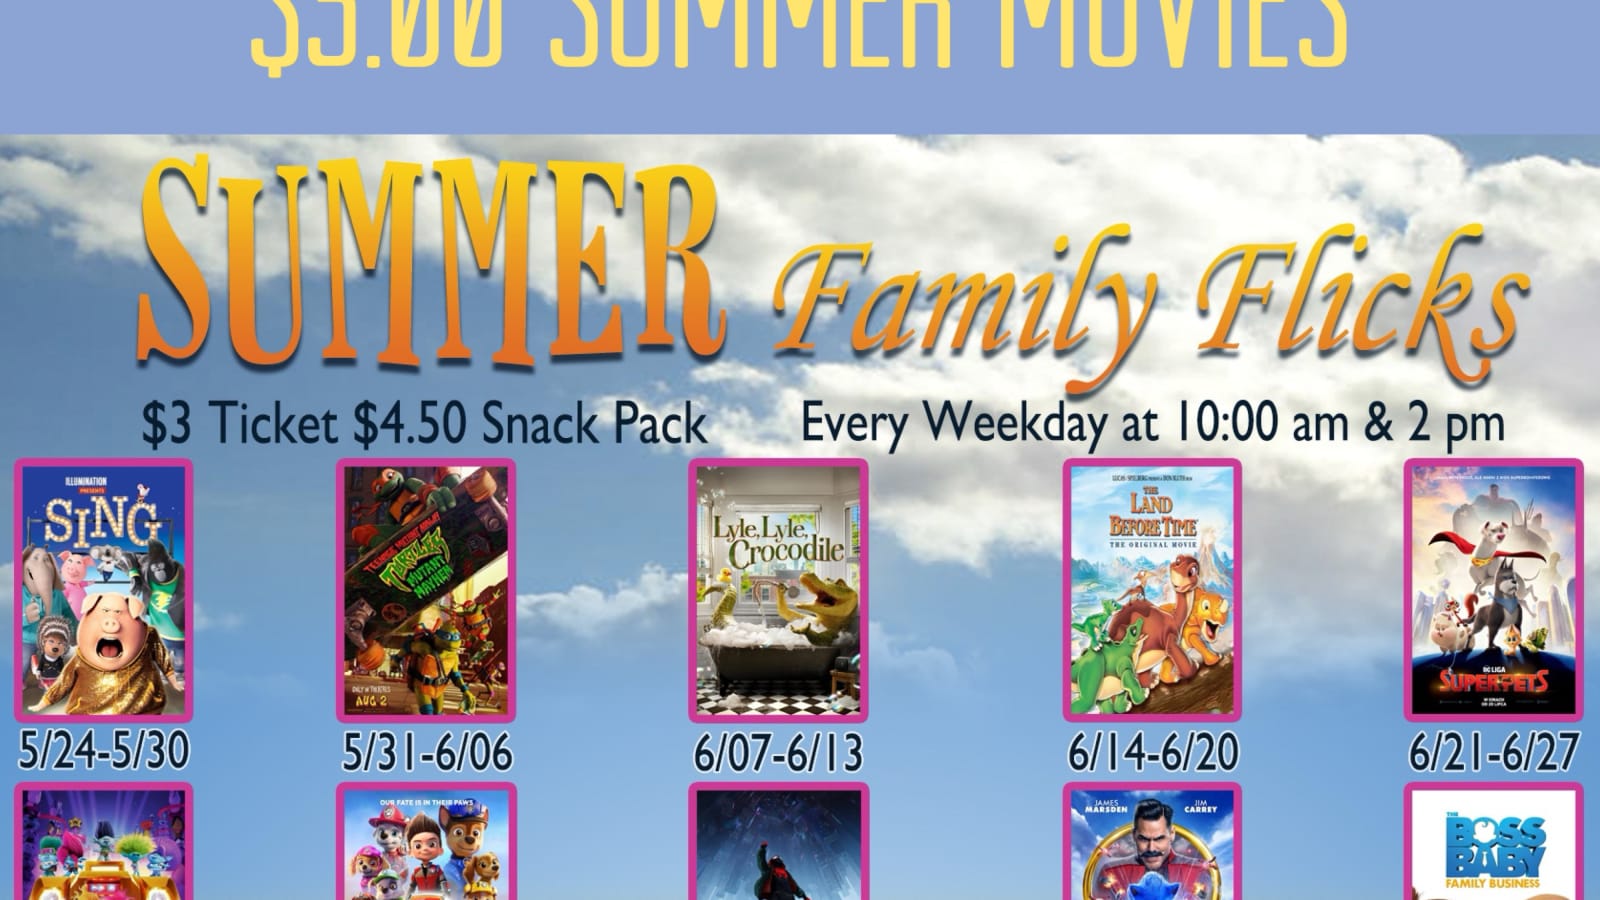 $ 3.00 Summer Family Flicks at Aurora Cineplex